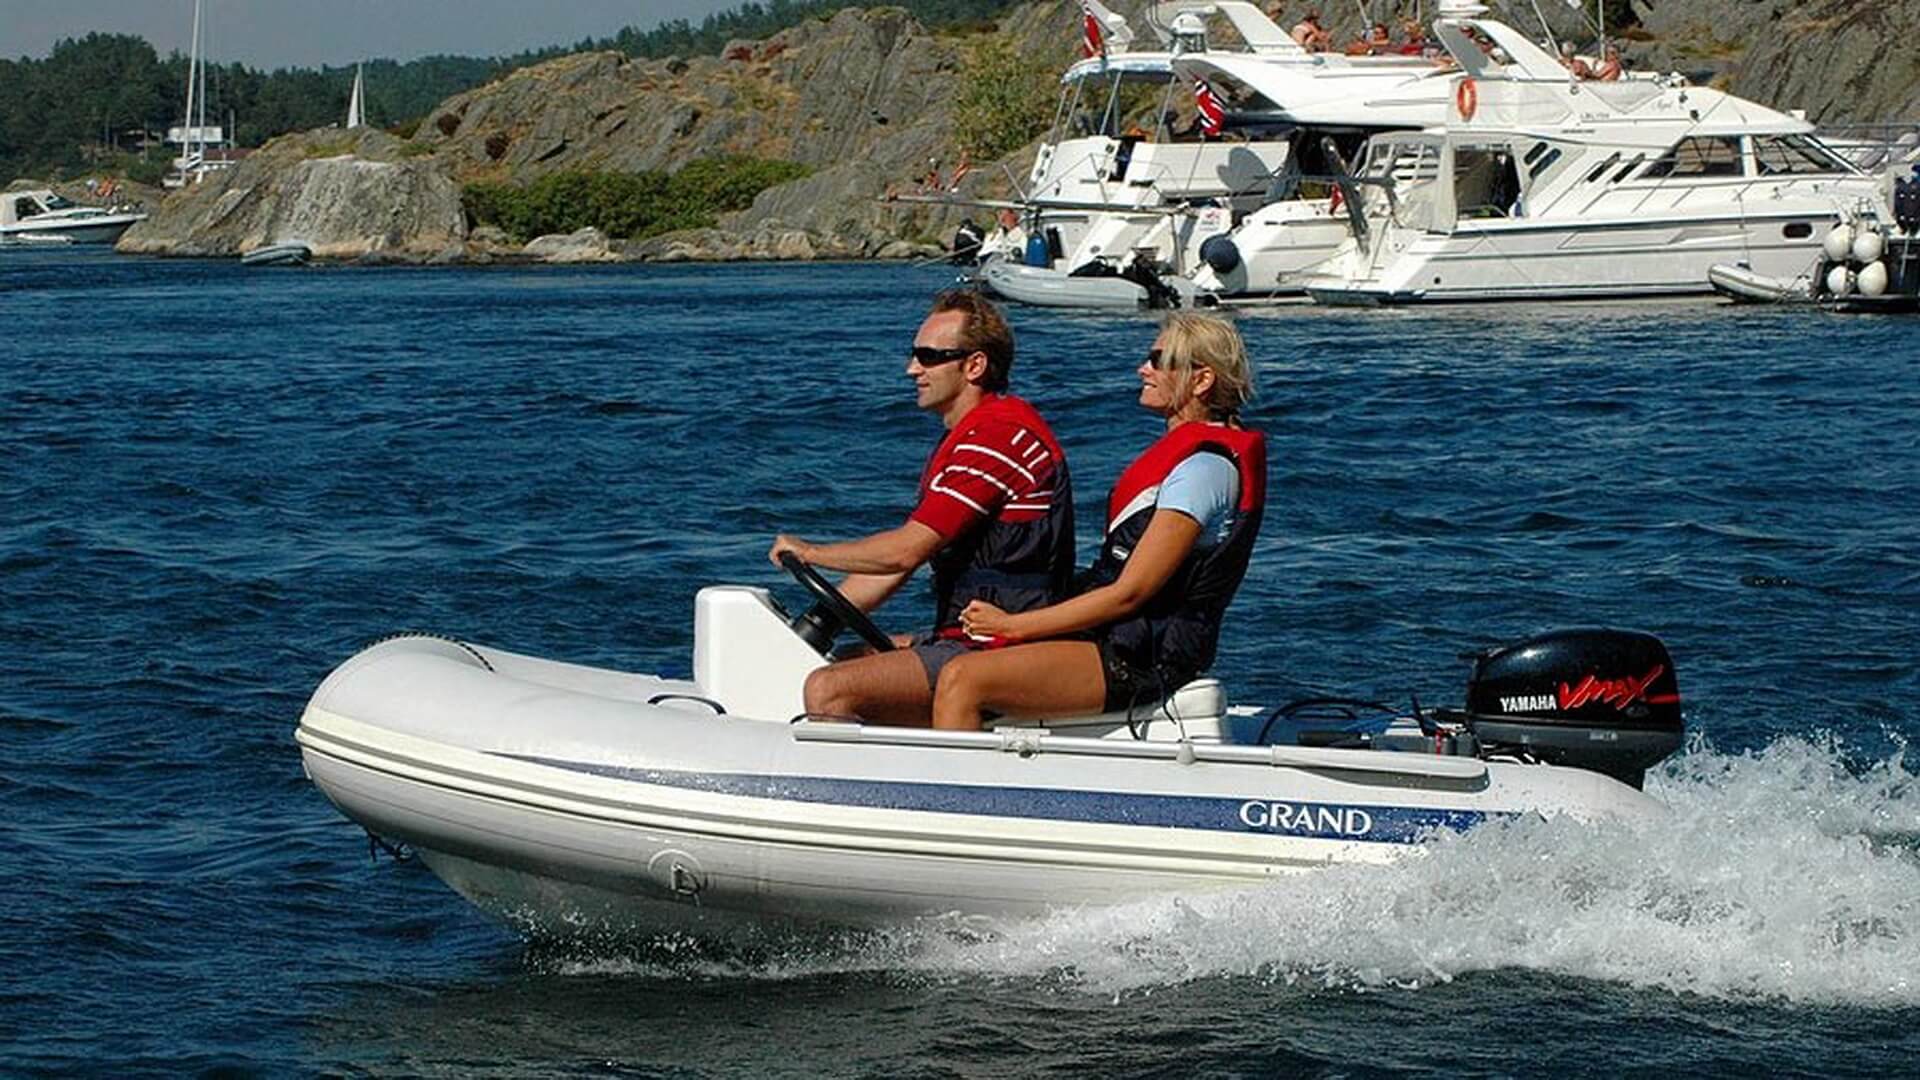 Надувная лодка с жестким дном GRAND Silver Line S300S, Надувная лодка GRAND Silver Line S300S, GRAND Silver Line S300S, GRAND Silver Line S300SF, GRAND S300S, GRAND S300SF, GRAND S300, Надувная лодка GRAND, Надувная лодка ГРАНД, Надувная лодка с жестким дном, RIB, Rigid Inflatable Boats